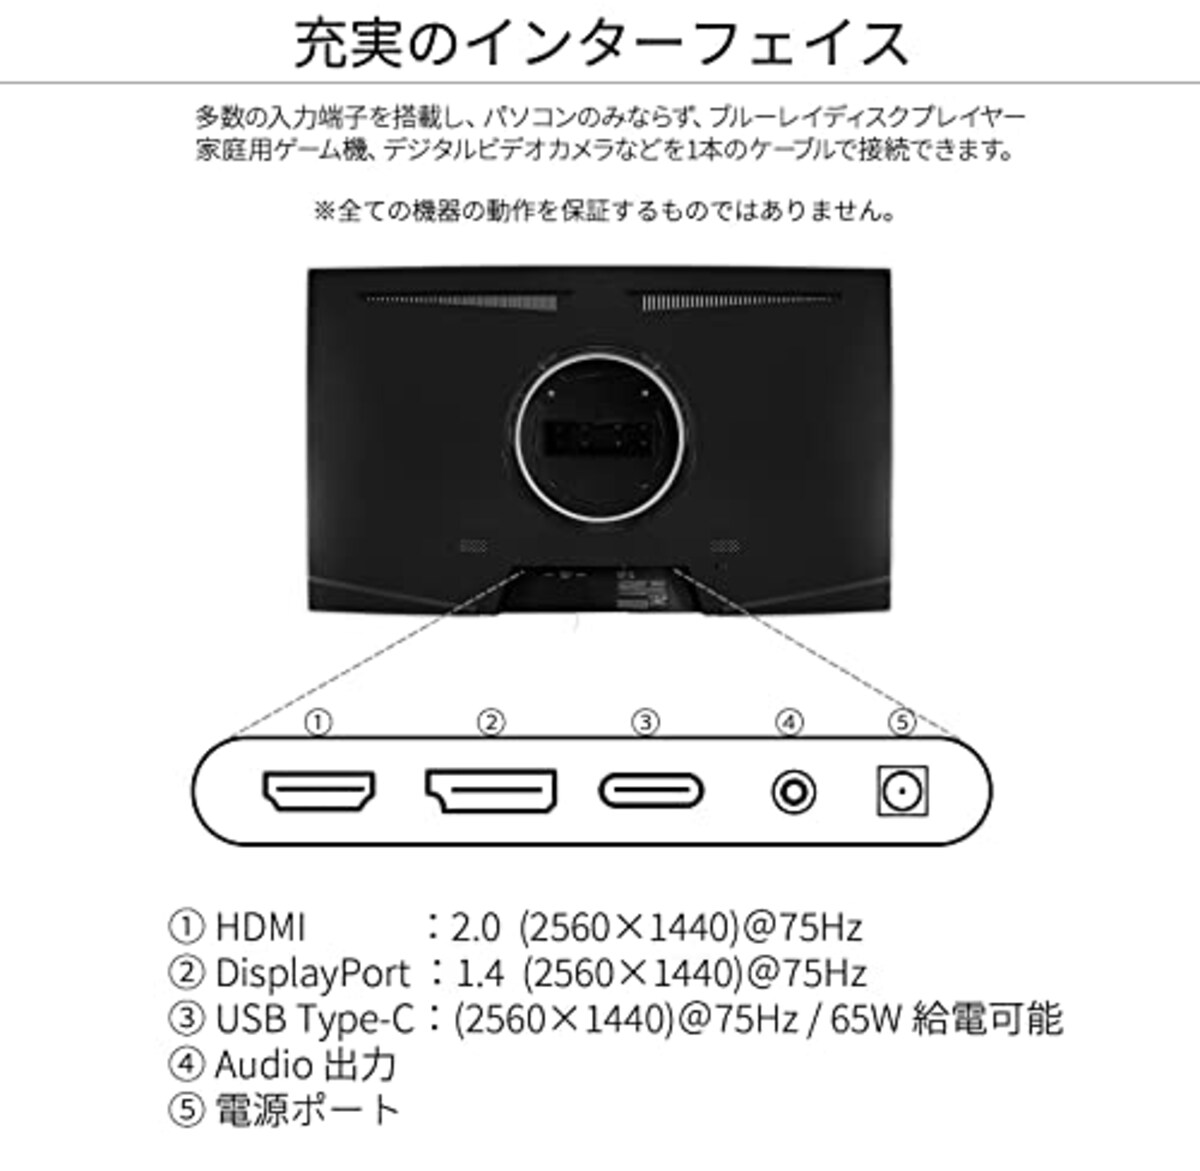  JAPANNEXT VAパネル搭載32インチ液晶モニター WQHD解像度 USB-C給電対応 JN-V320WQHD-C65W HDMI DP USB-C(65W給電) PIP/PBP機能搭載 sRGB 100%画像6 